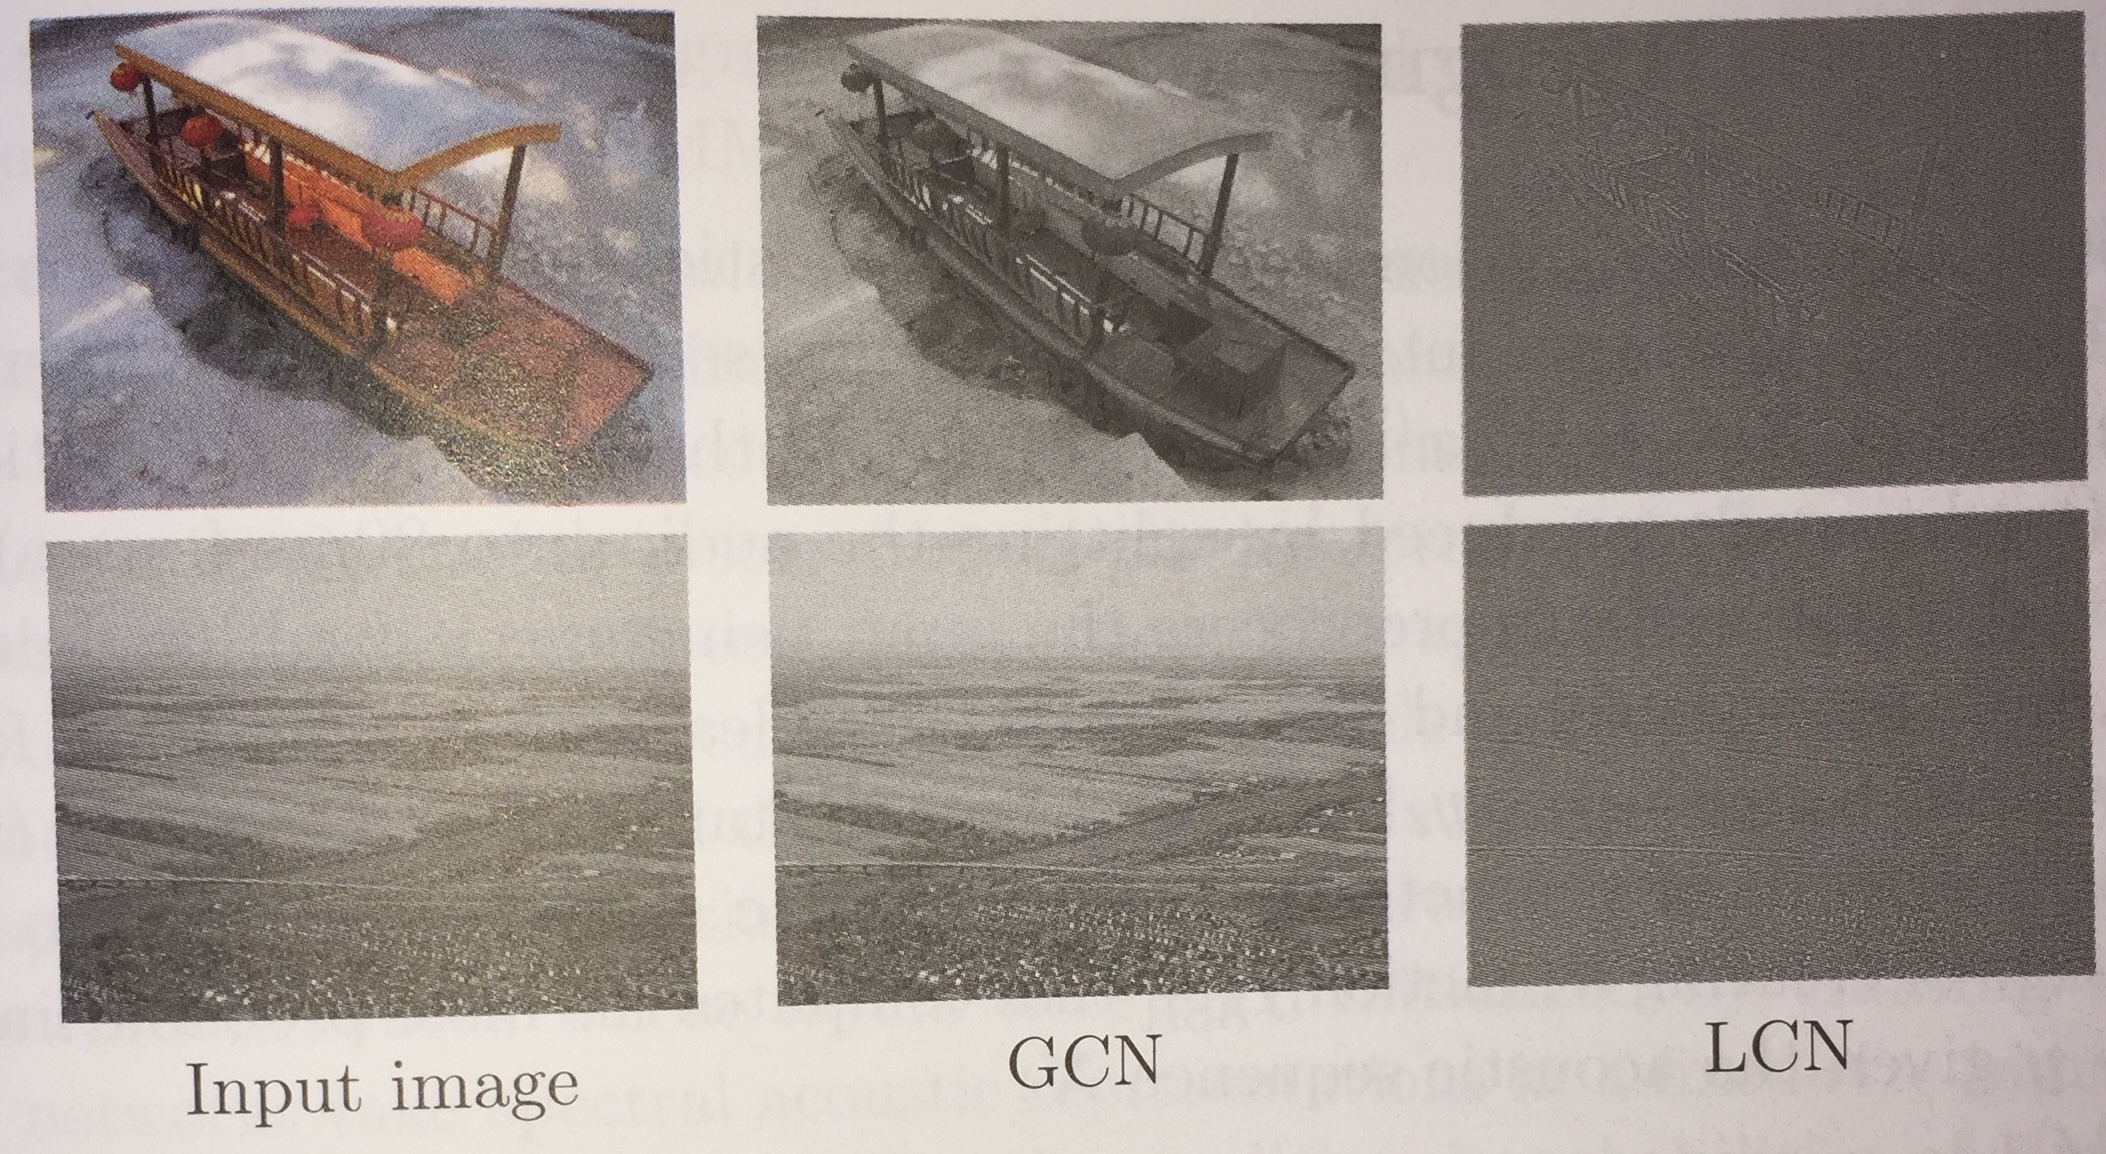 GCN versus LCN normalization